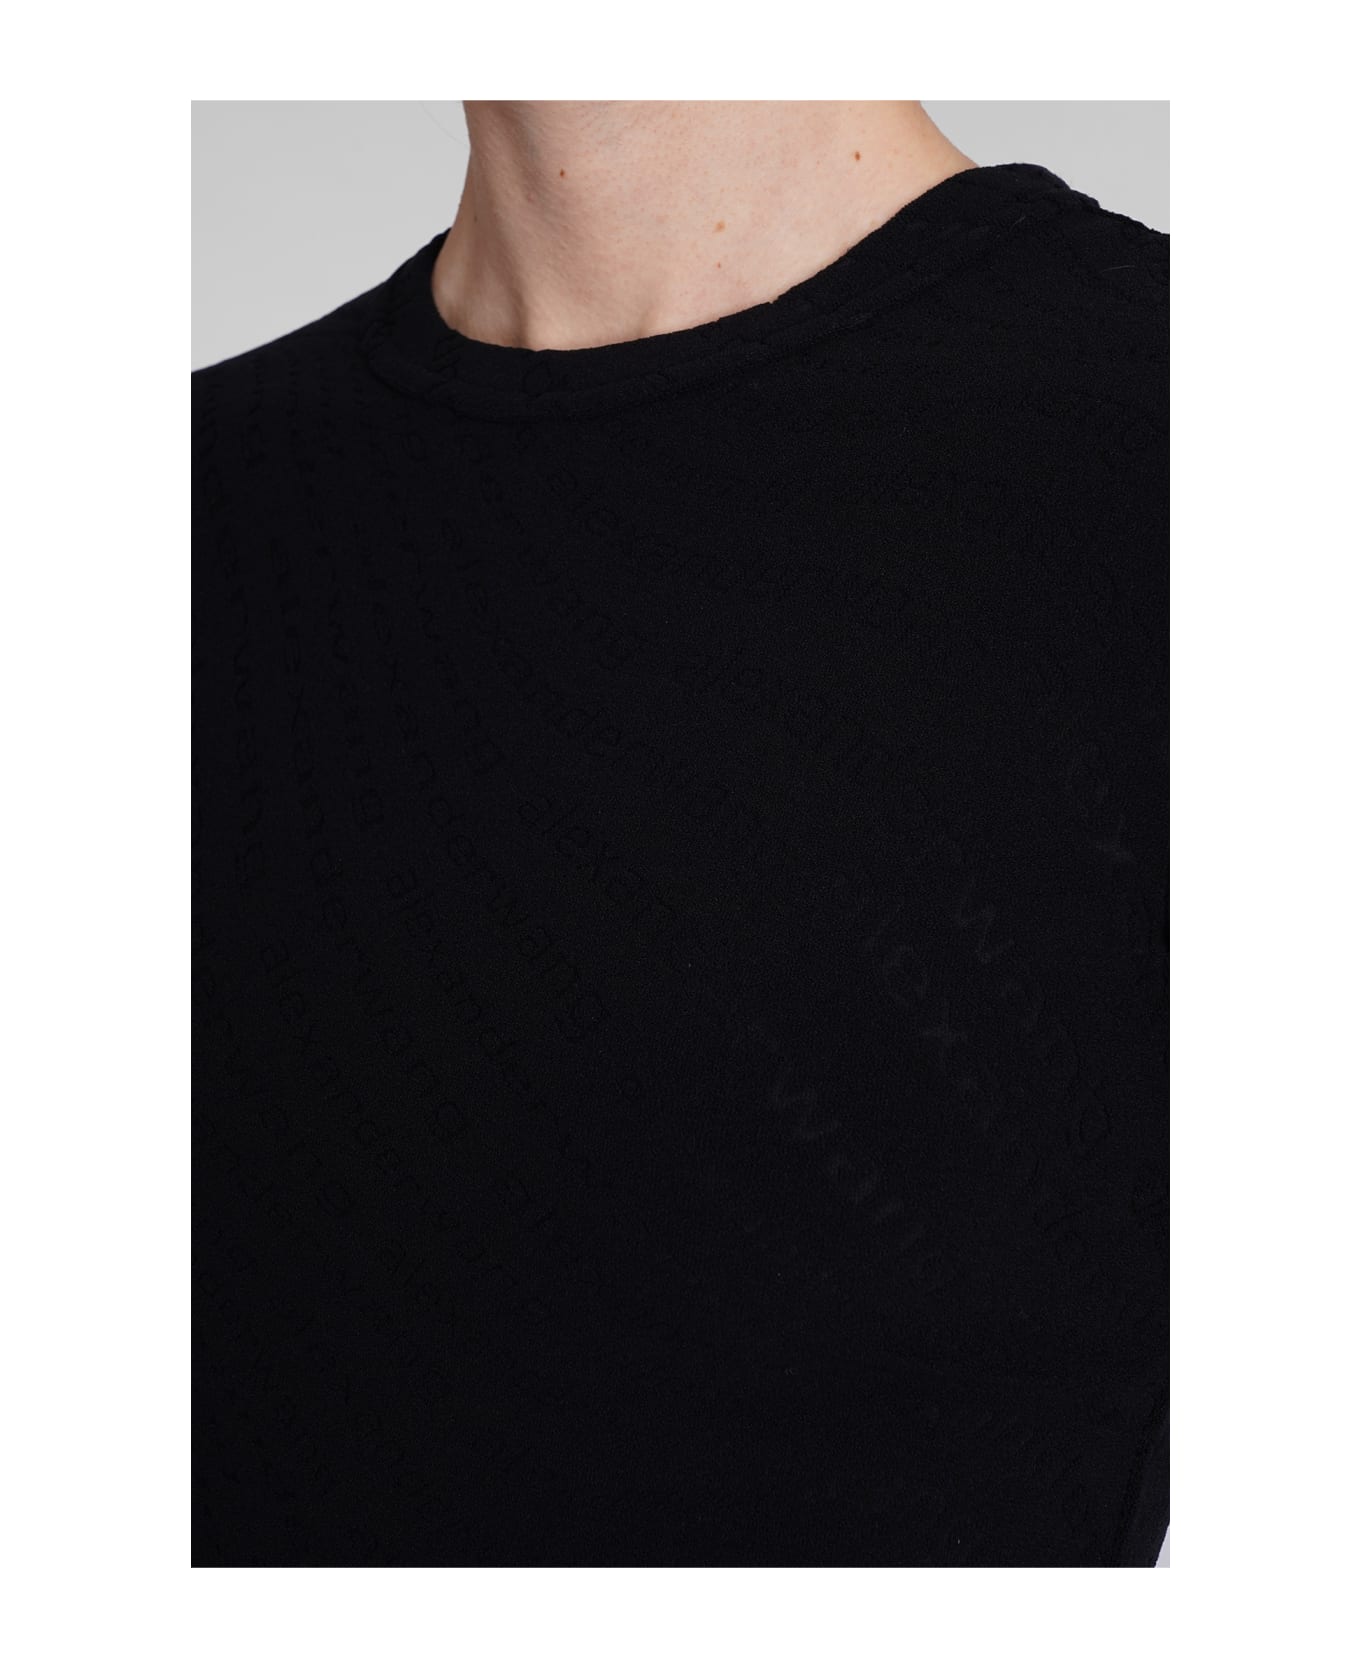 Alexander Wang T-shirt In Black Polyamide - Black